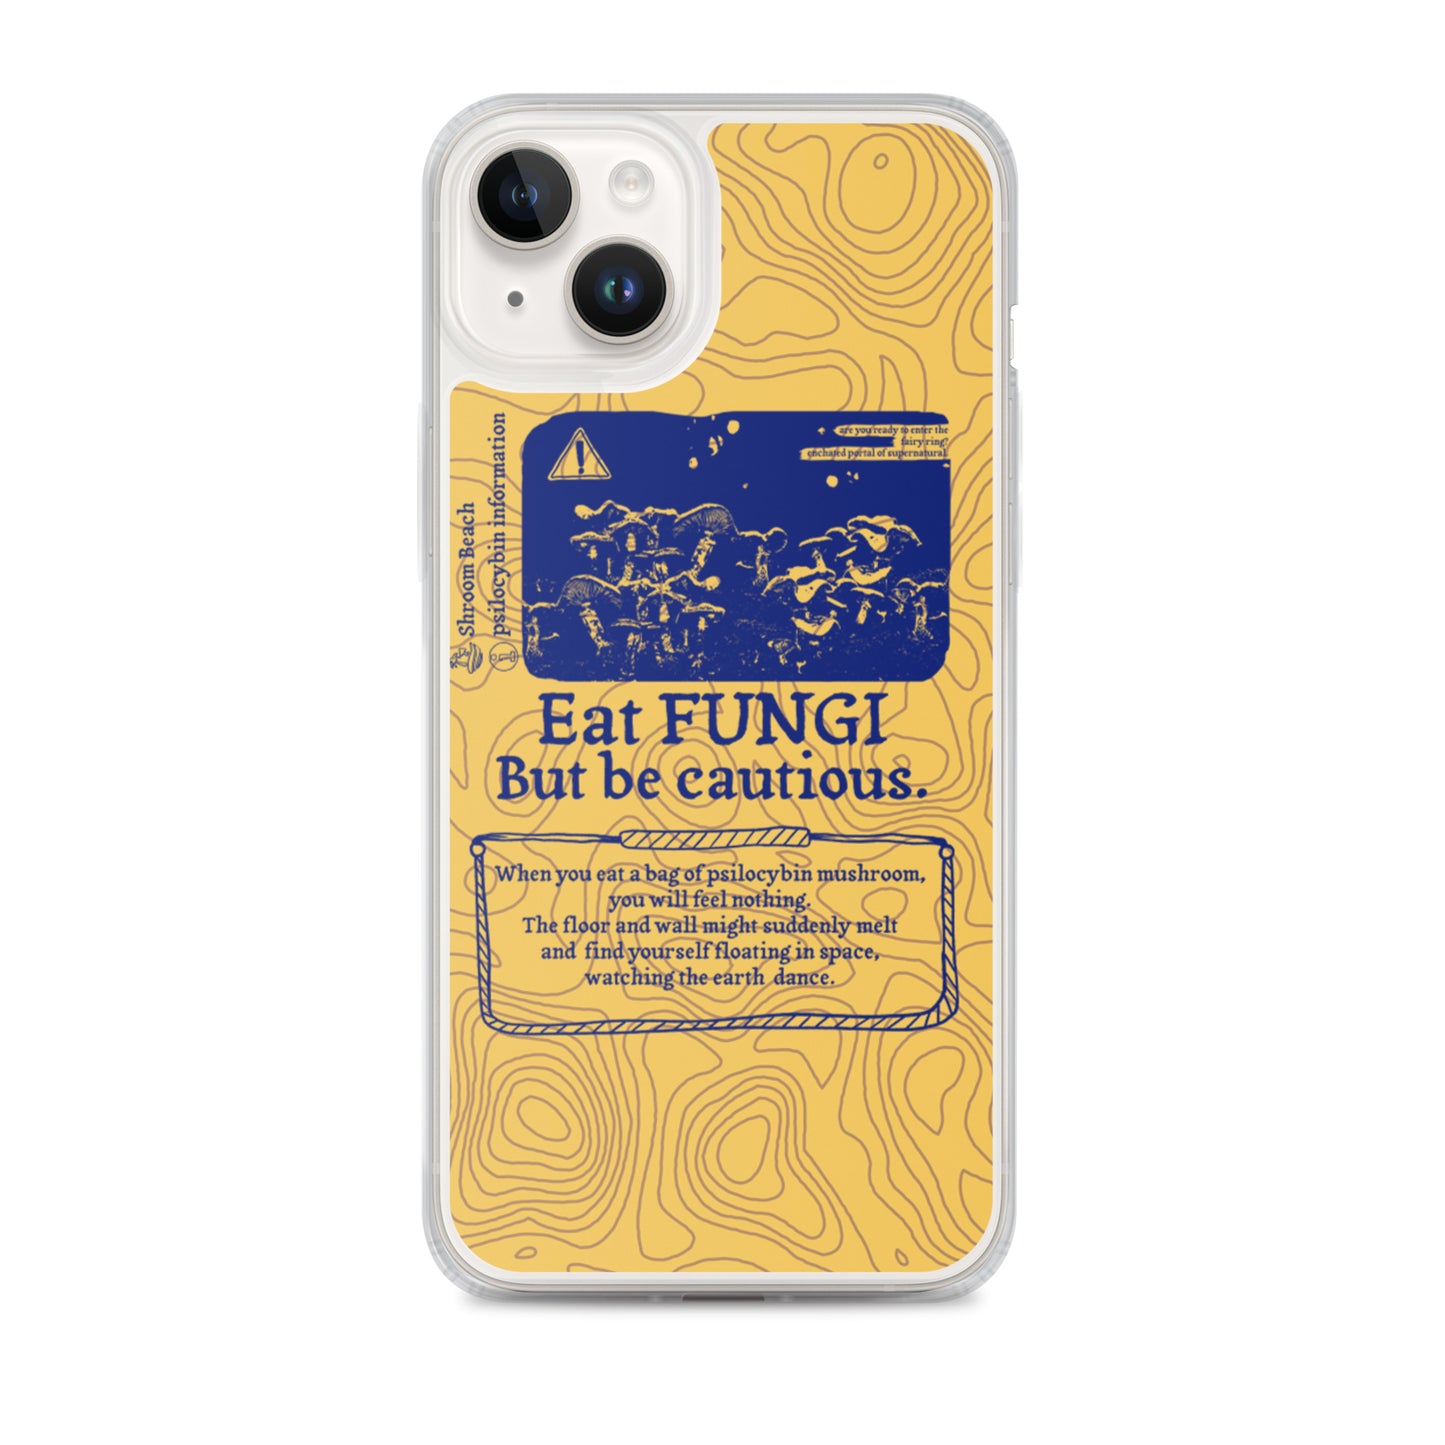 Eat Fun Guy iPhone Case